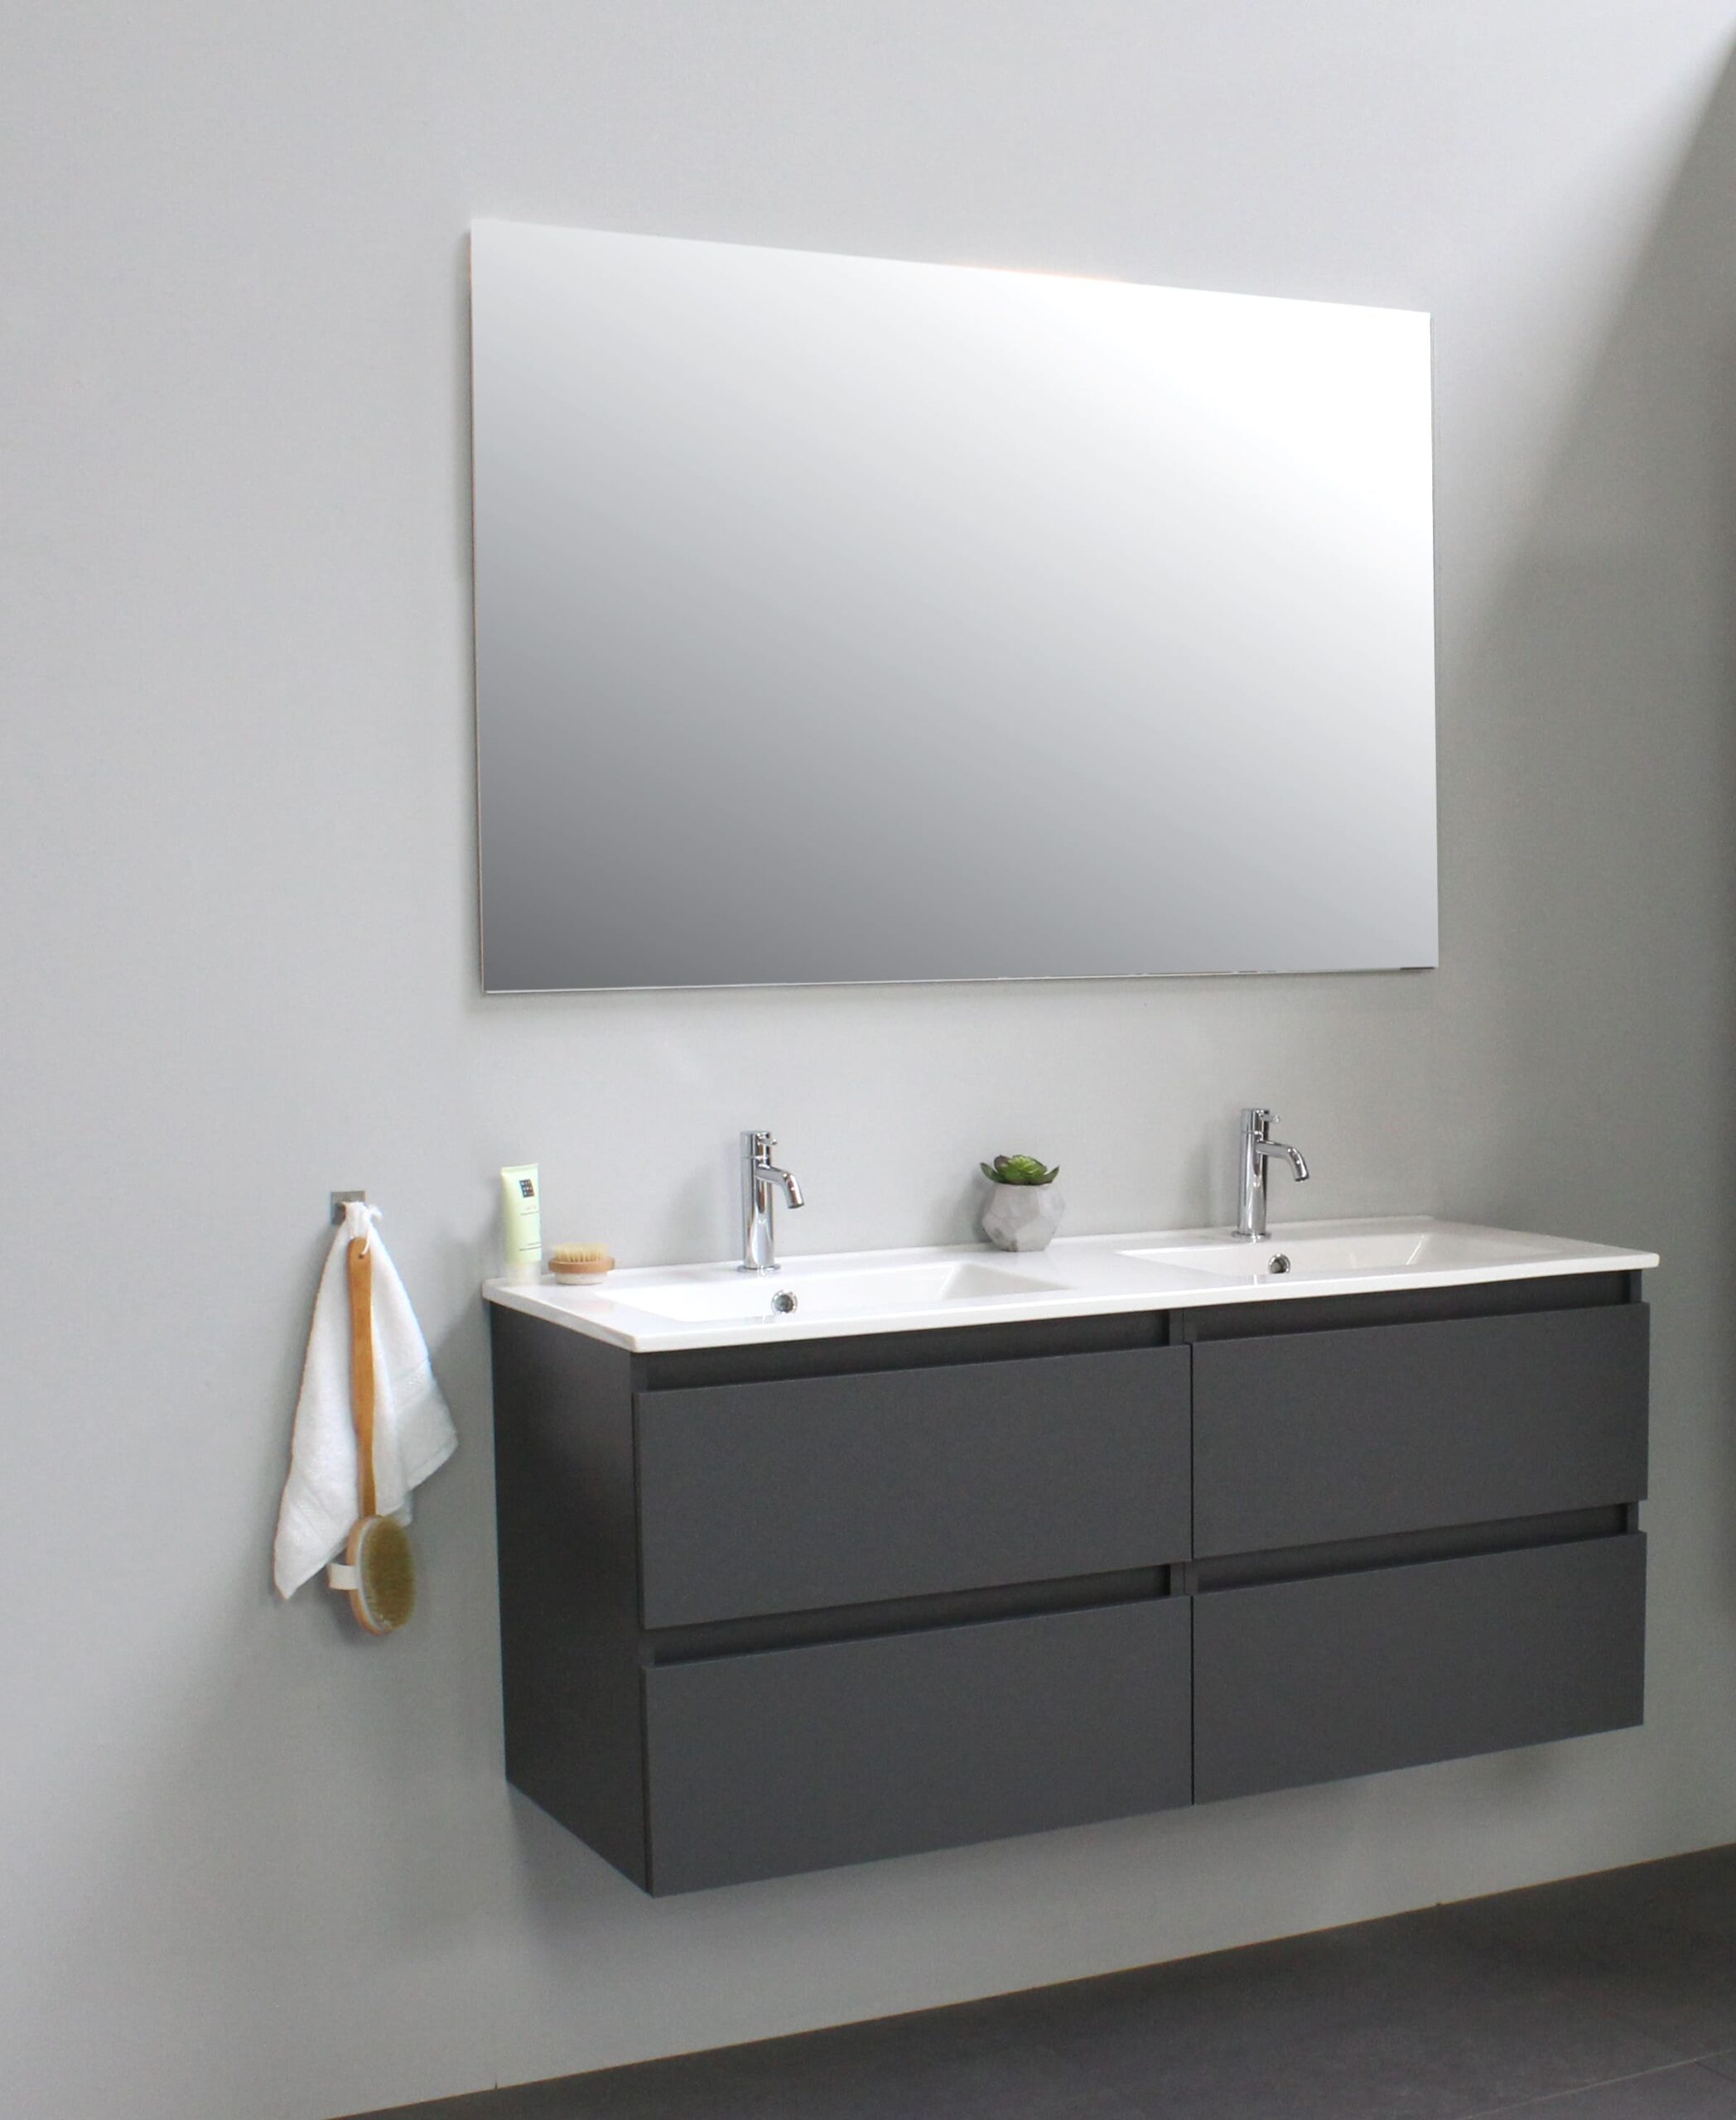 Sanilet badkamermeubel - 120cm - onderkast mat antraciet - wastafel porselein - kraangat - zonder spiegel - bouwpakket - Badkamermeubel outlet